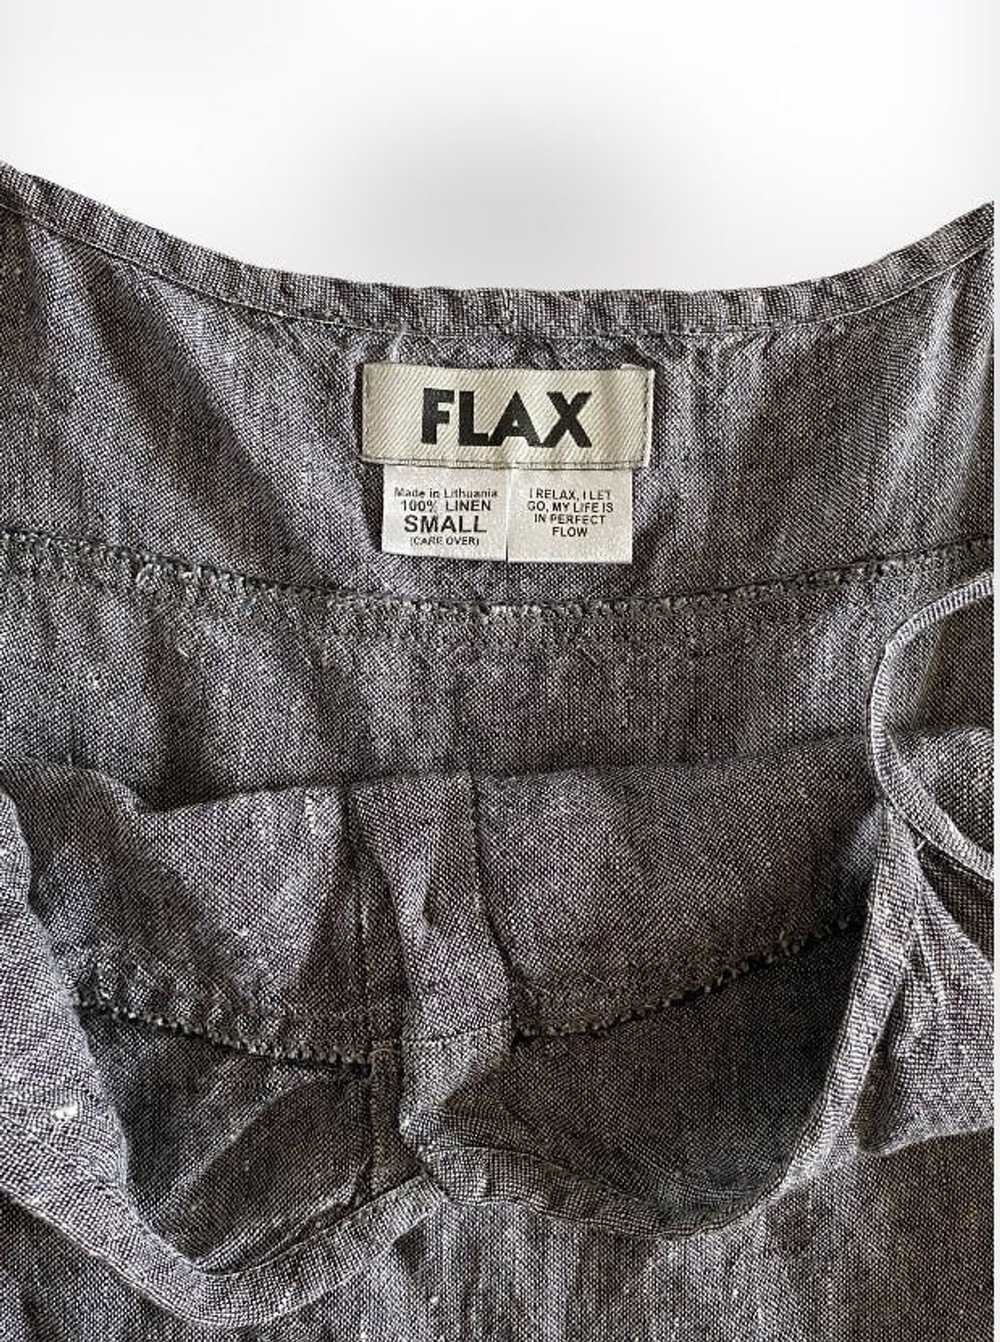 flax FLAX Lithuania 100% Linen Strap Maxi Dress S… - image 3